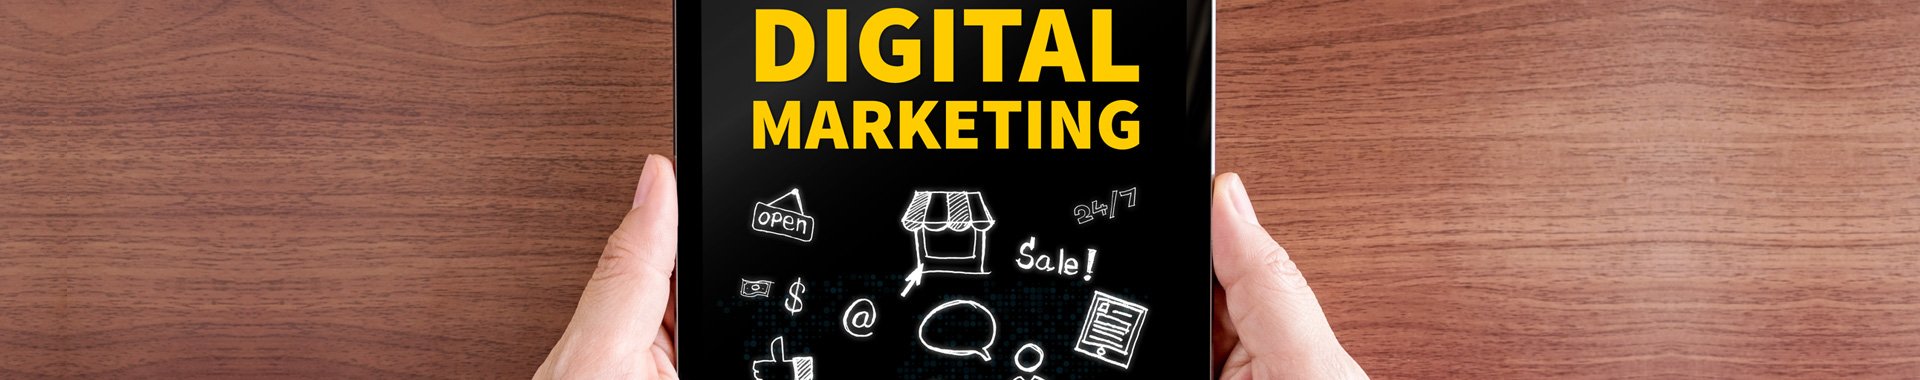 digital marketing service banner